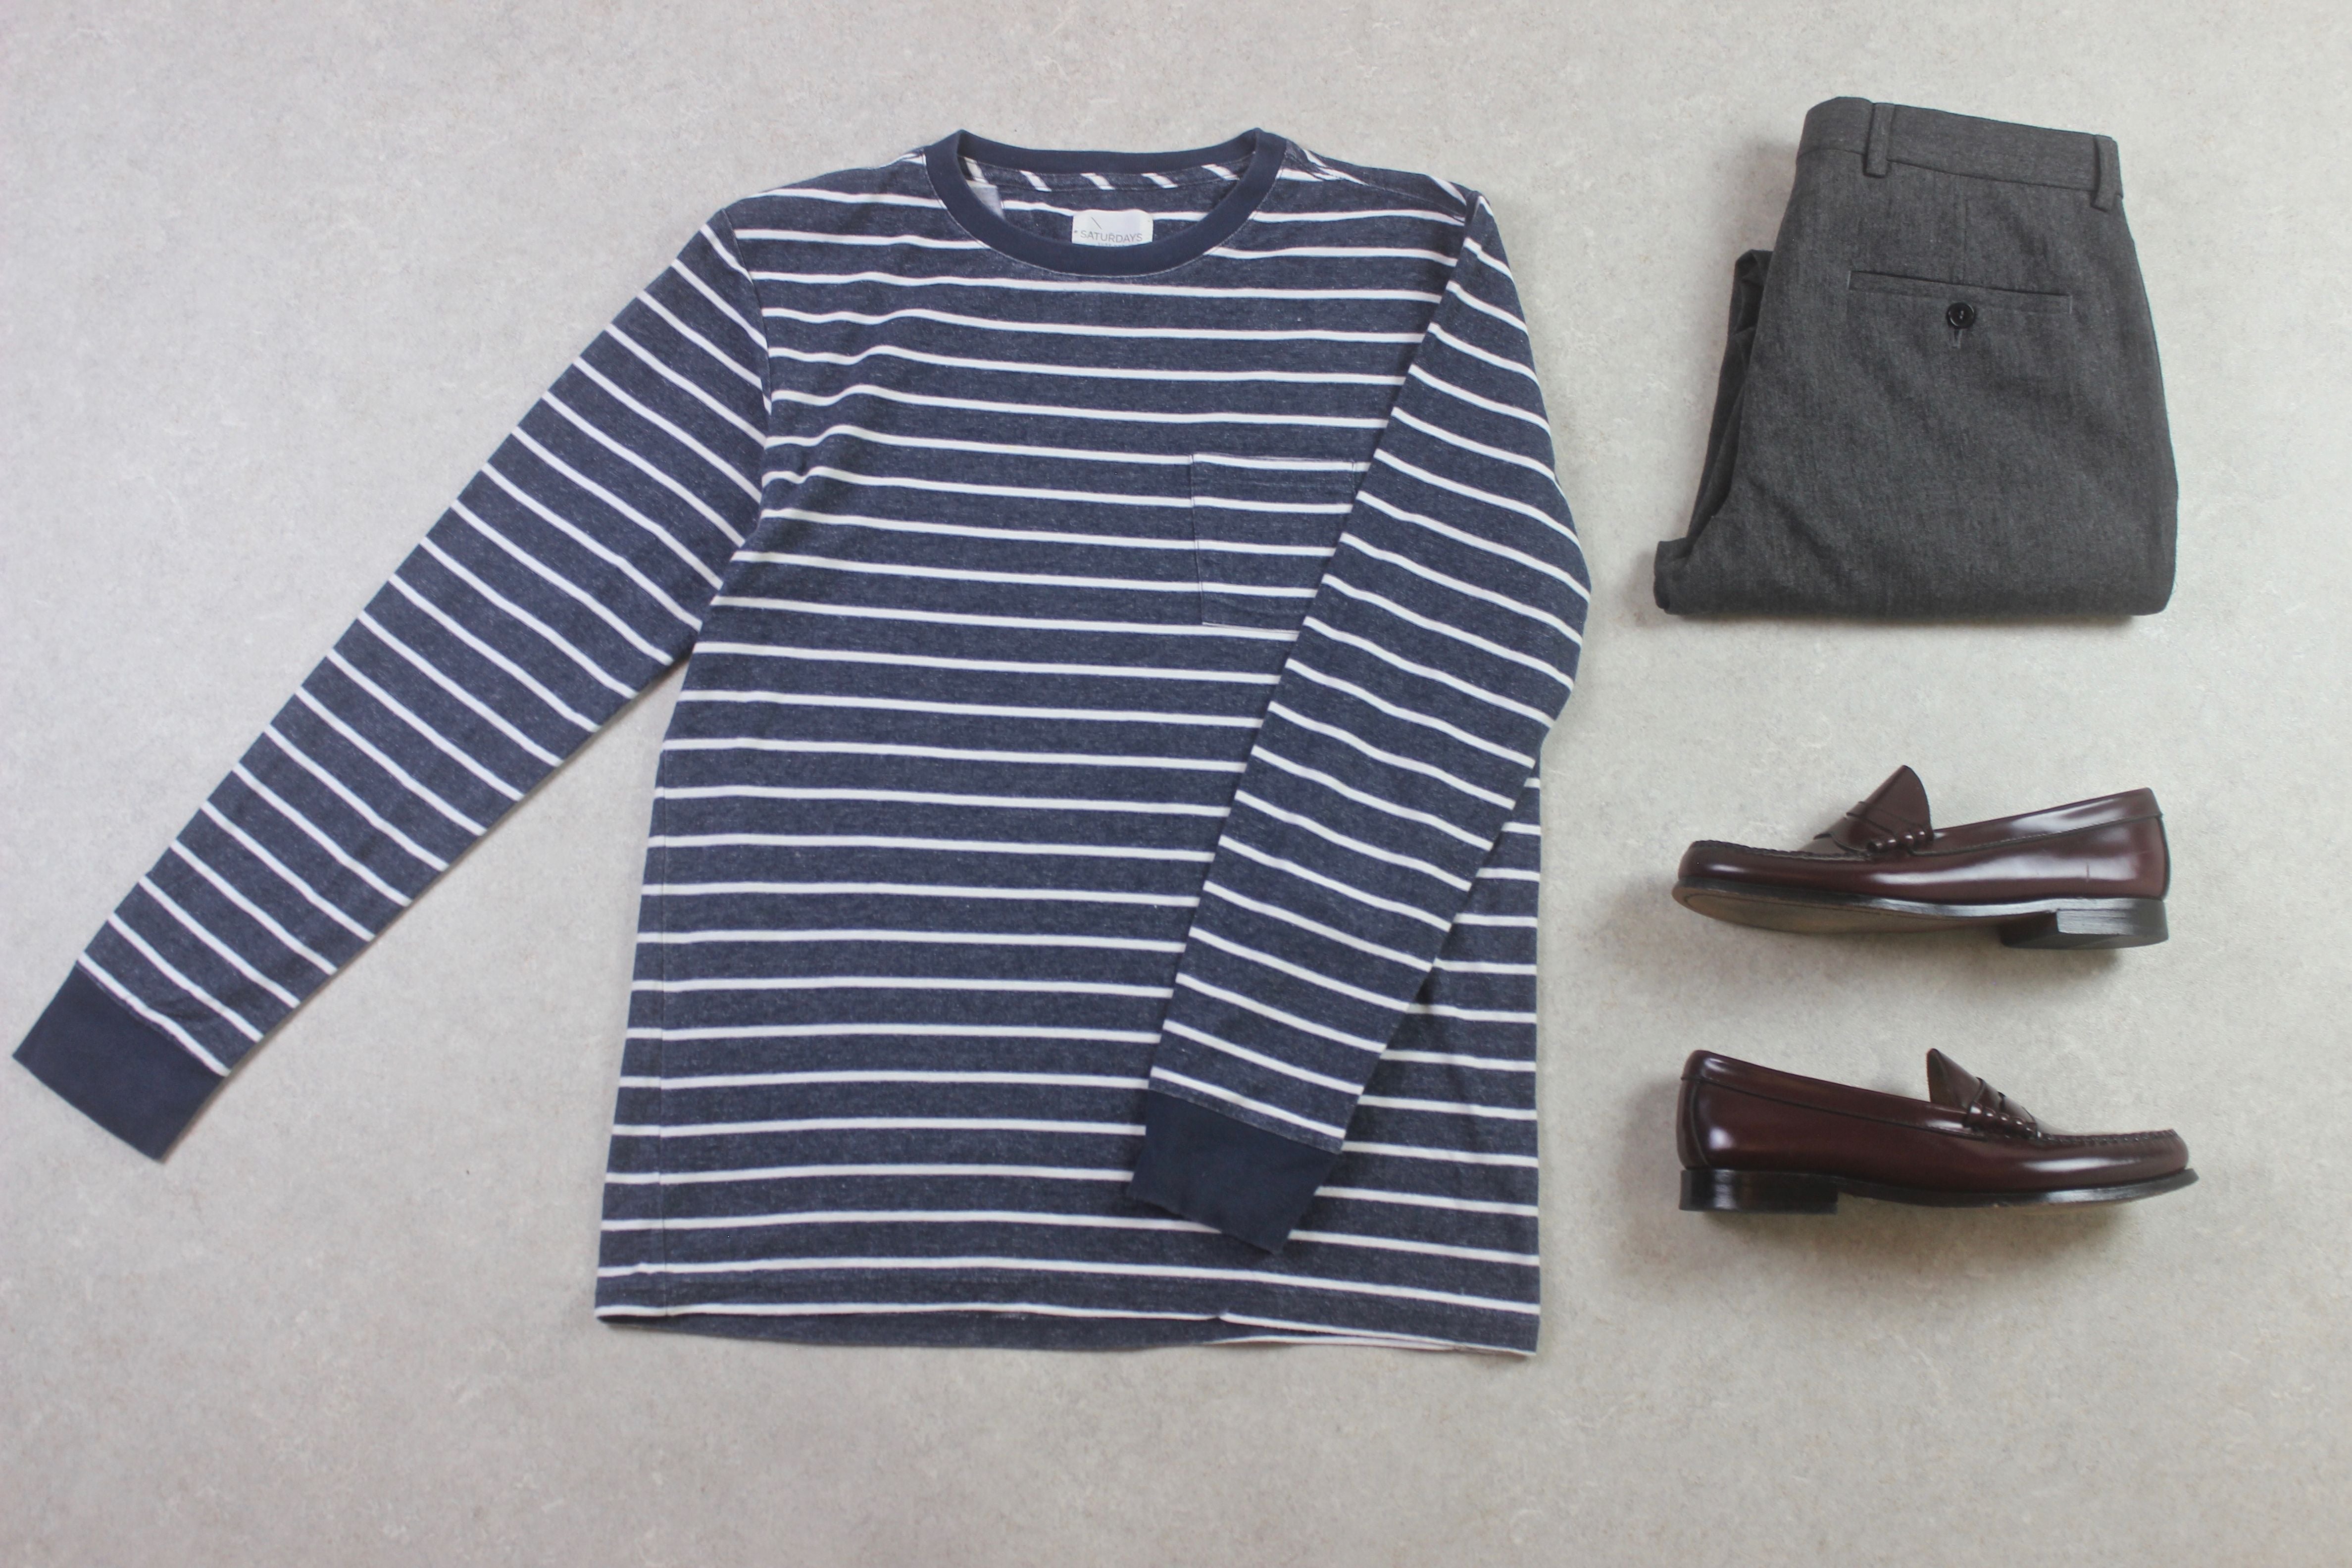 Saturdays NYC - Long Sleeve T Shirt - Blue/White Stripe - Large